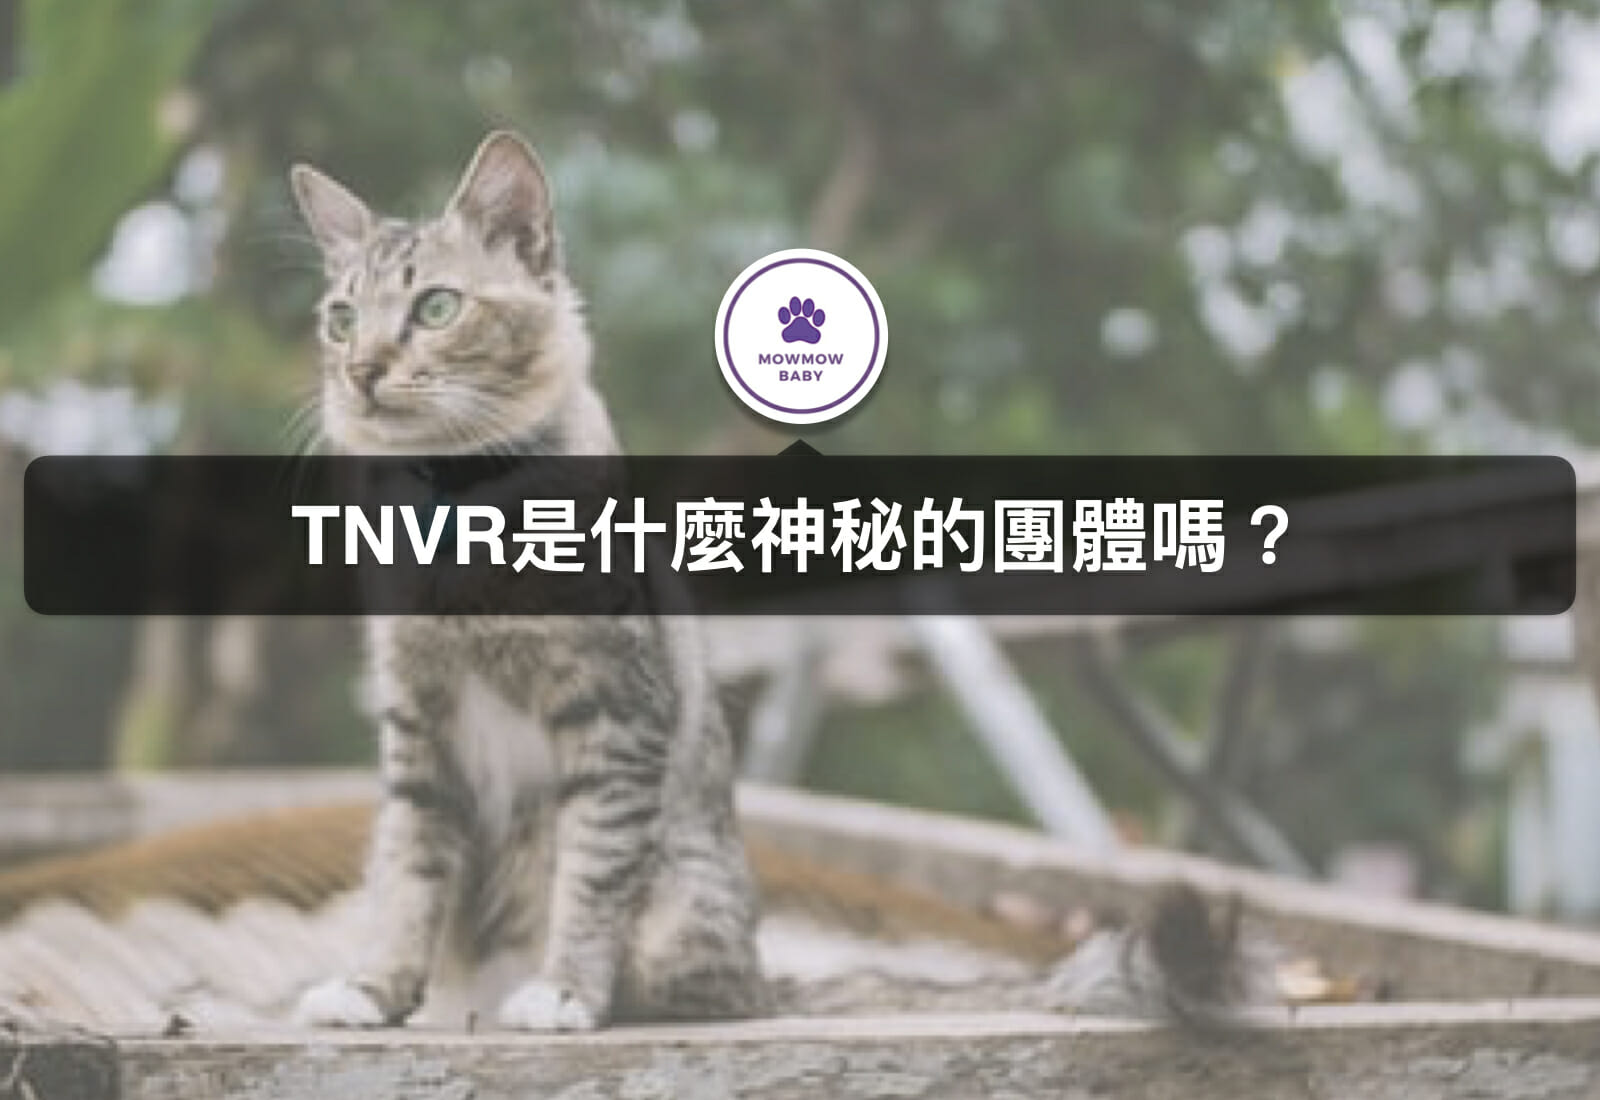 TNVR意思是幫助流浪貓狗進行結紮、原地、放養？